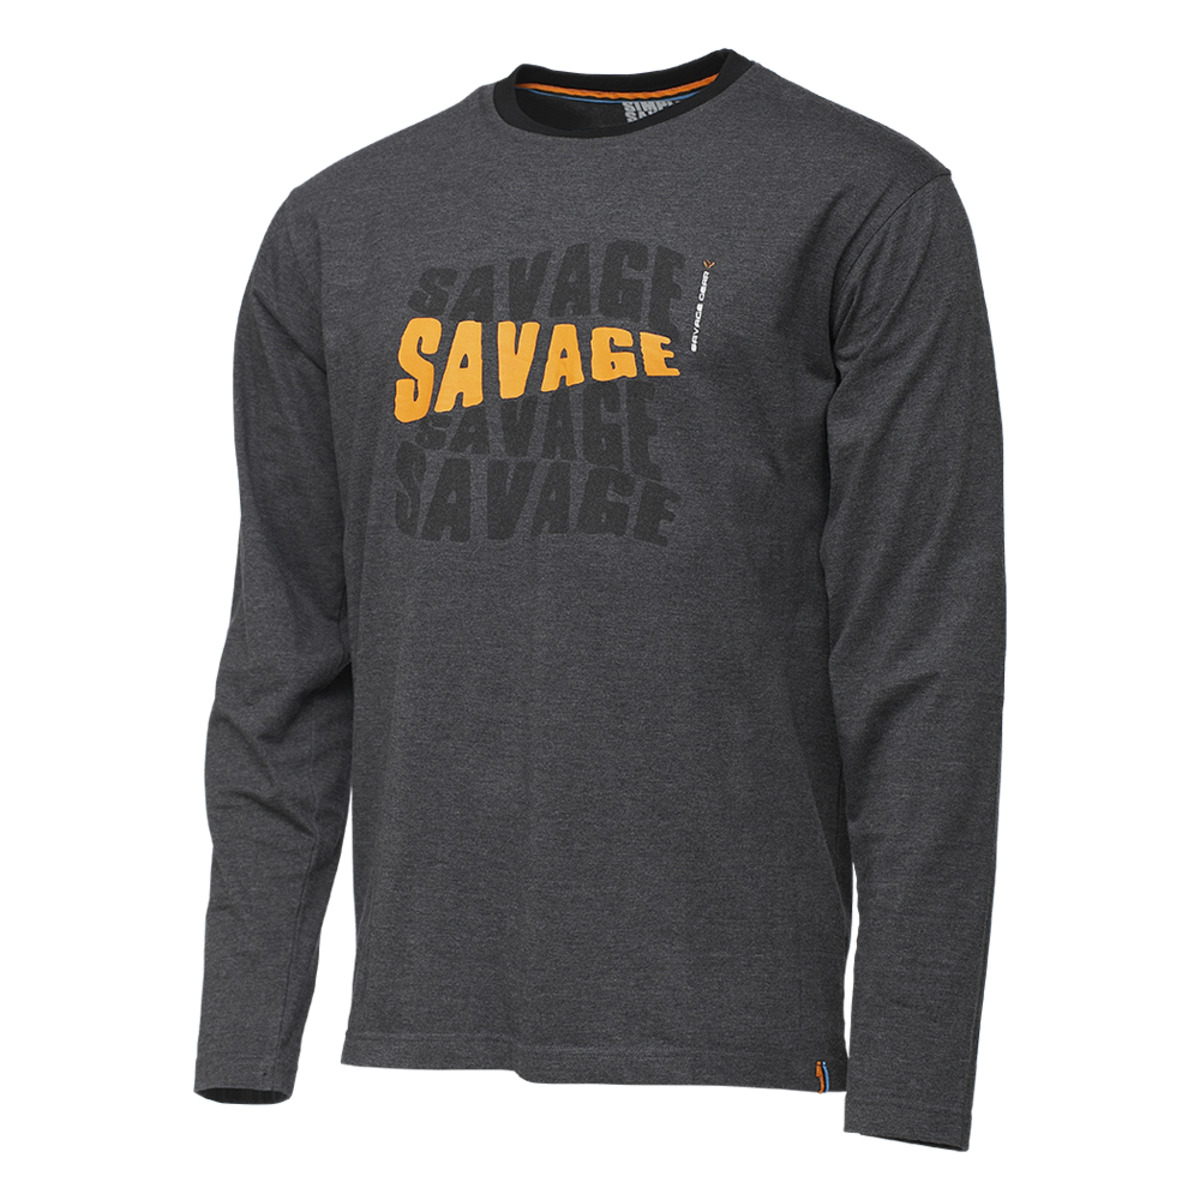 Savage Gear Simply Savage Logo Tee Long Sleeve - XXL DARK GREY MELANGE